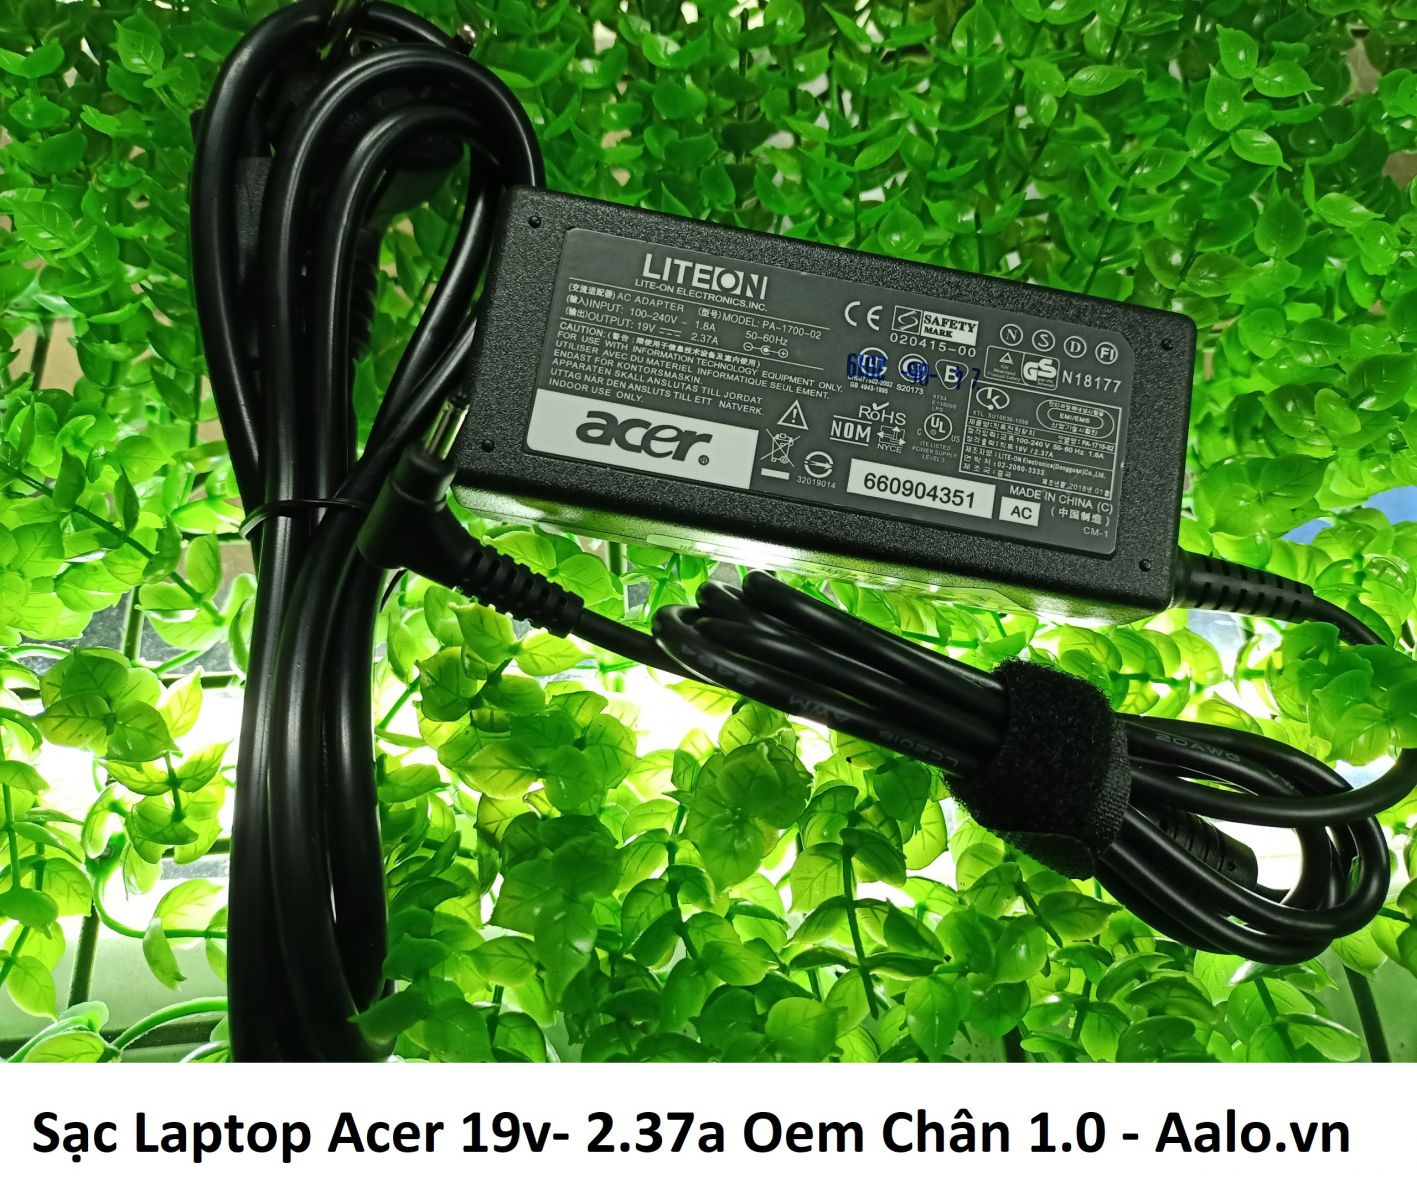 Sạc Laptop Acer 19v- 2.37a Oem Chân 1.0